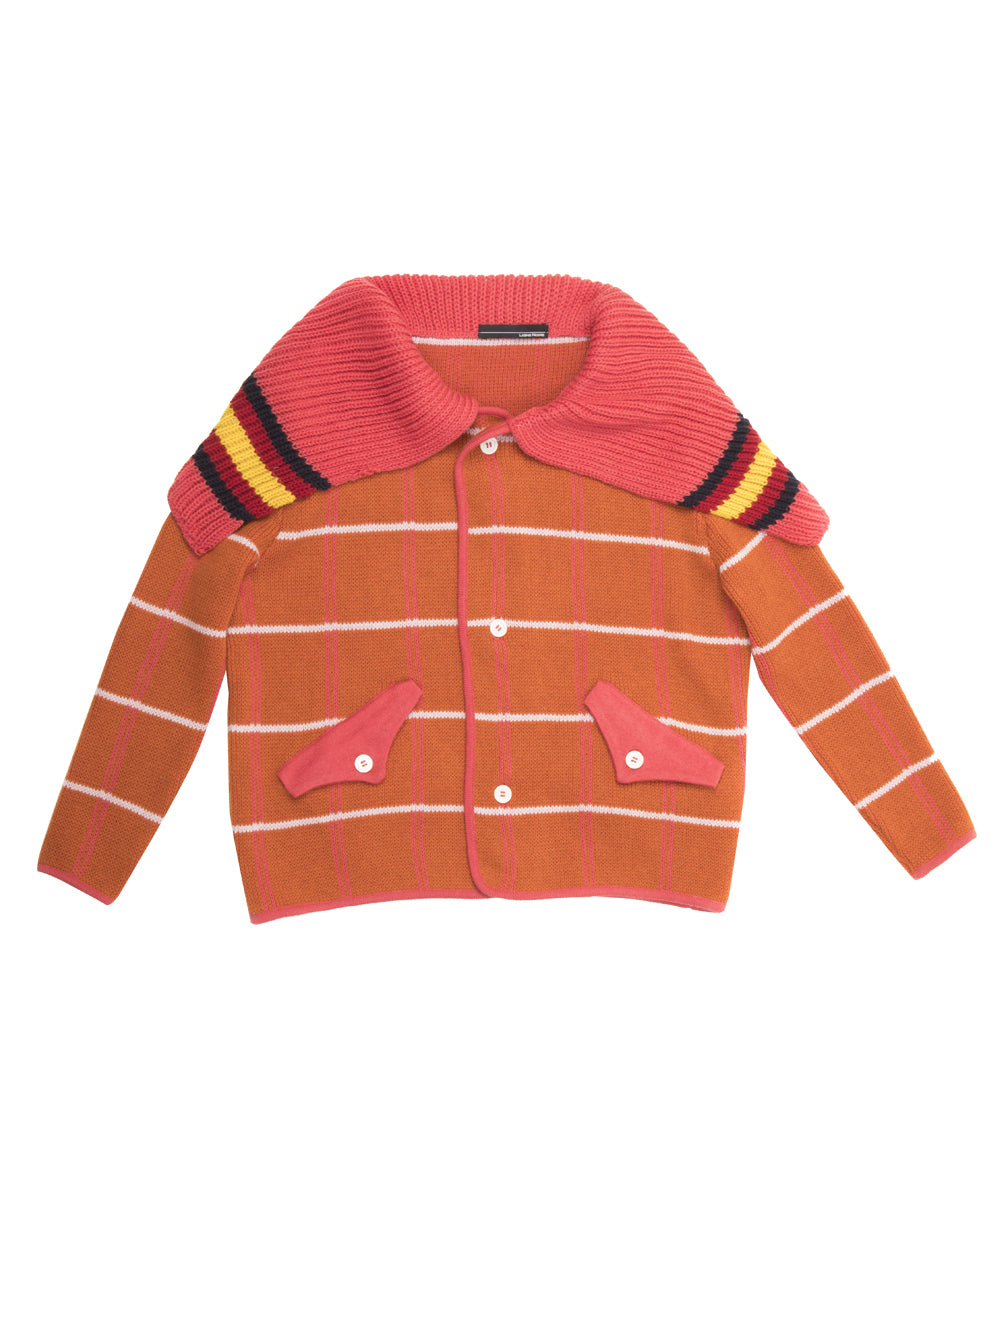 Tartan Orange Sweater Jacket